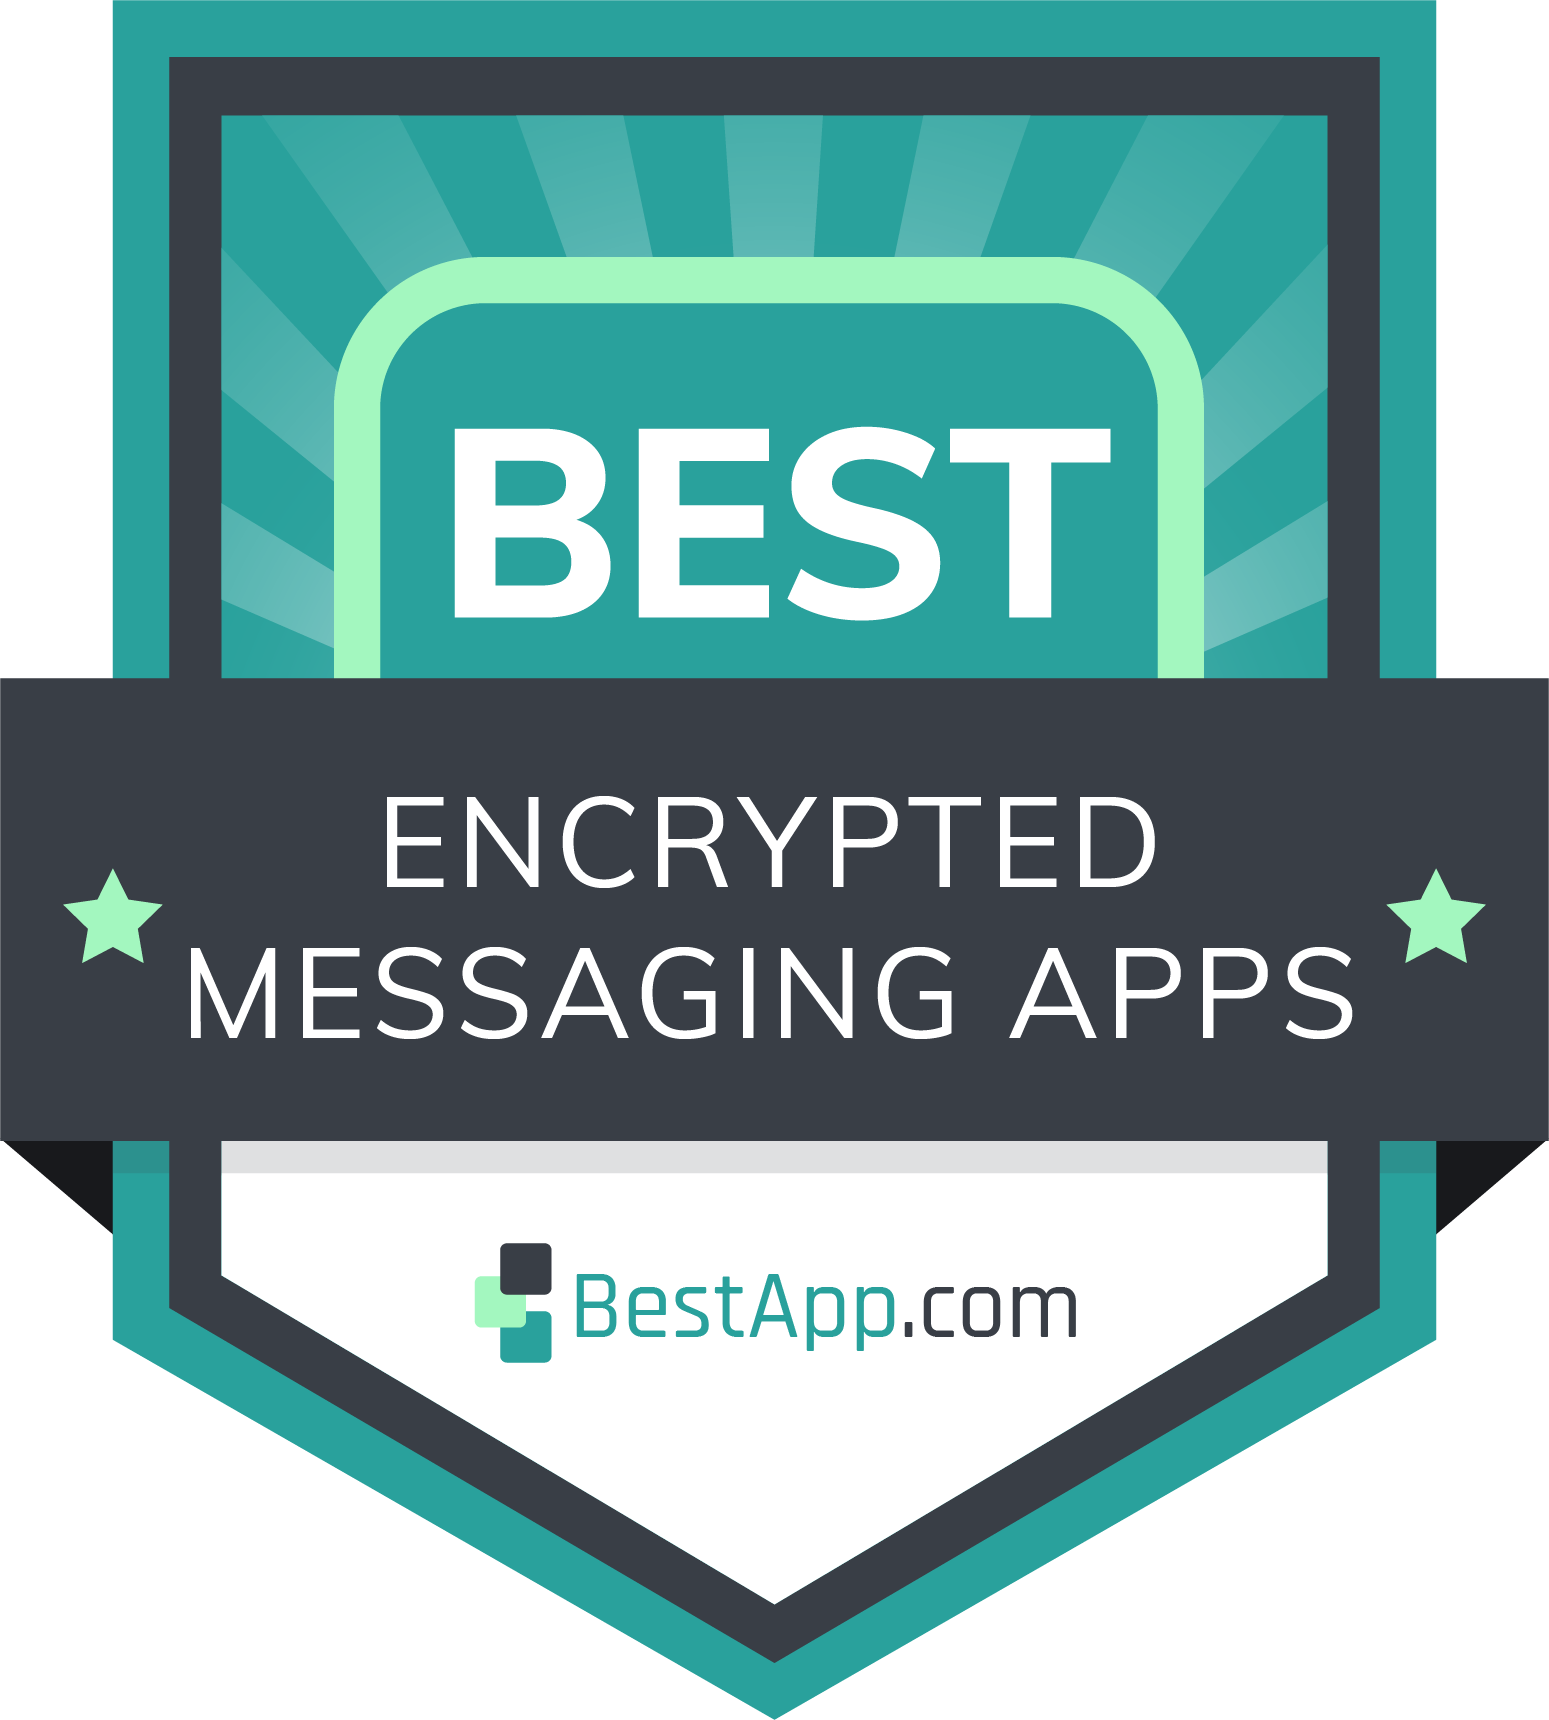 Best Encrypted Messaging Apps Badge